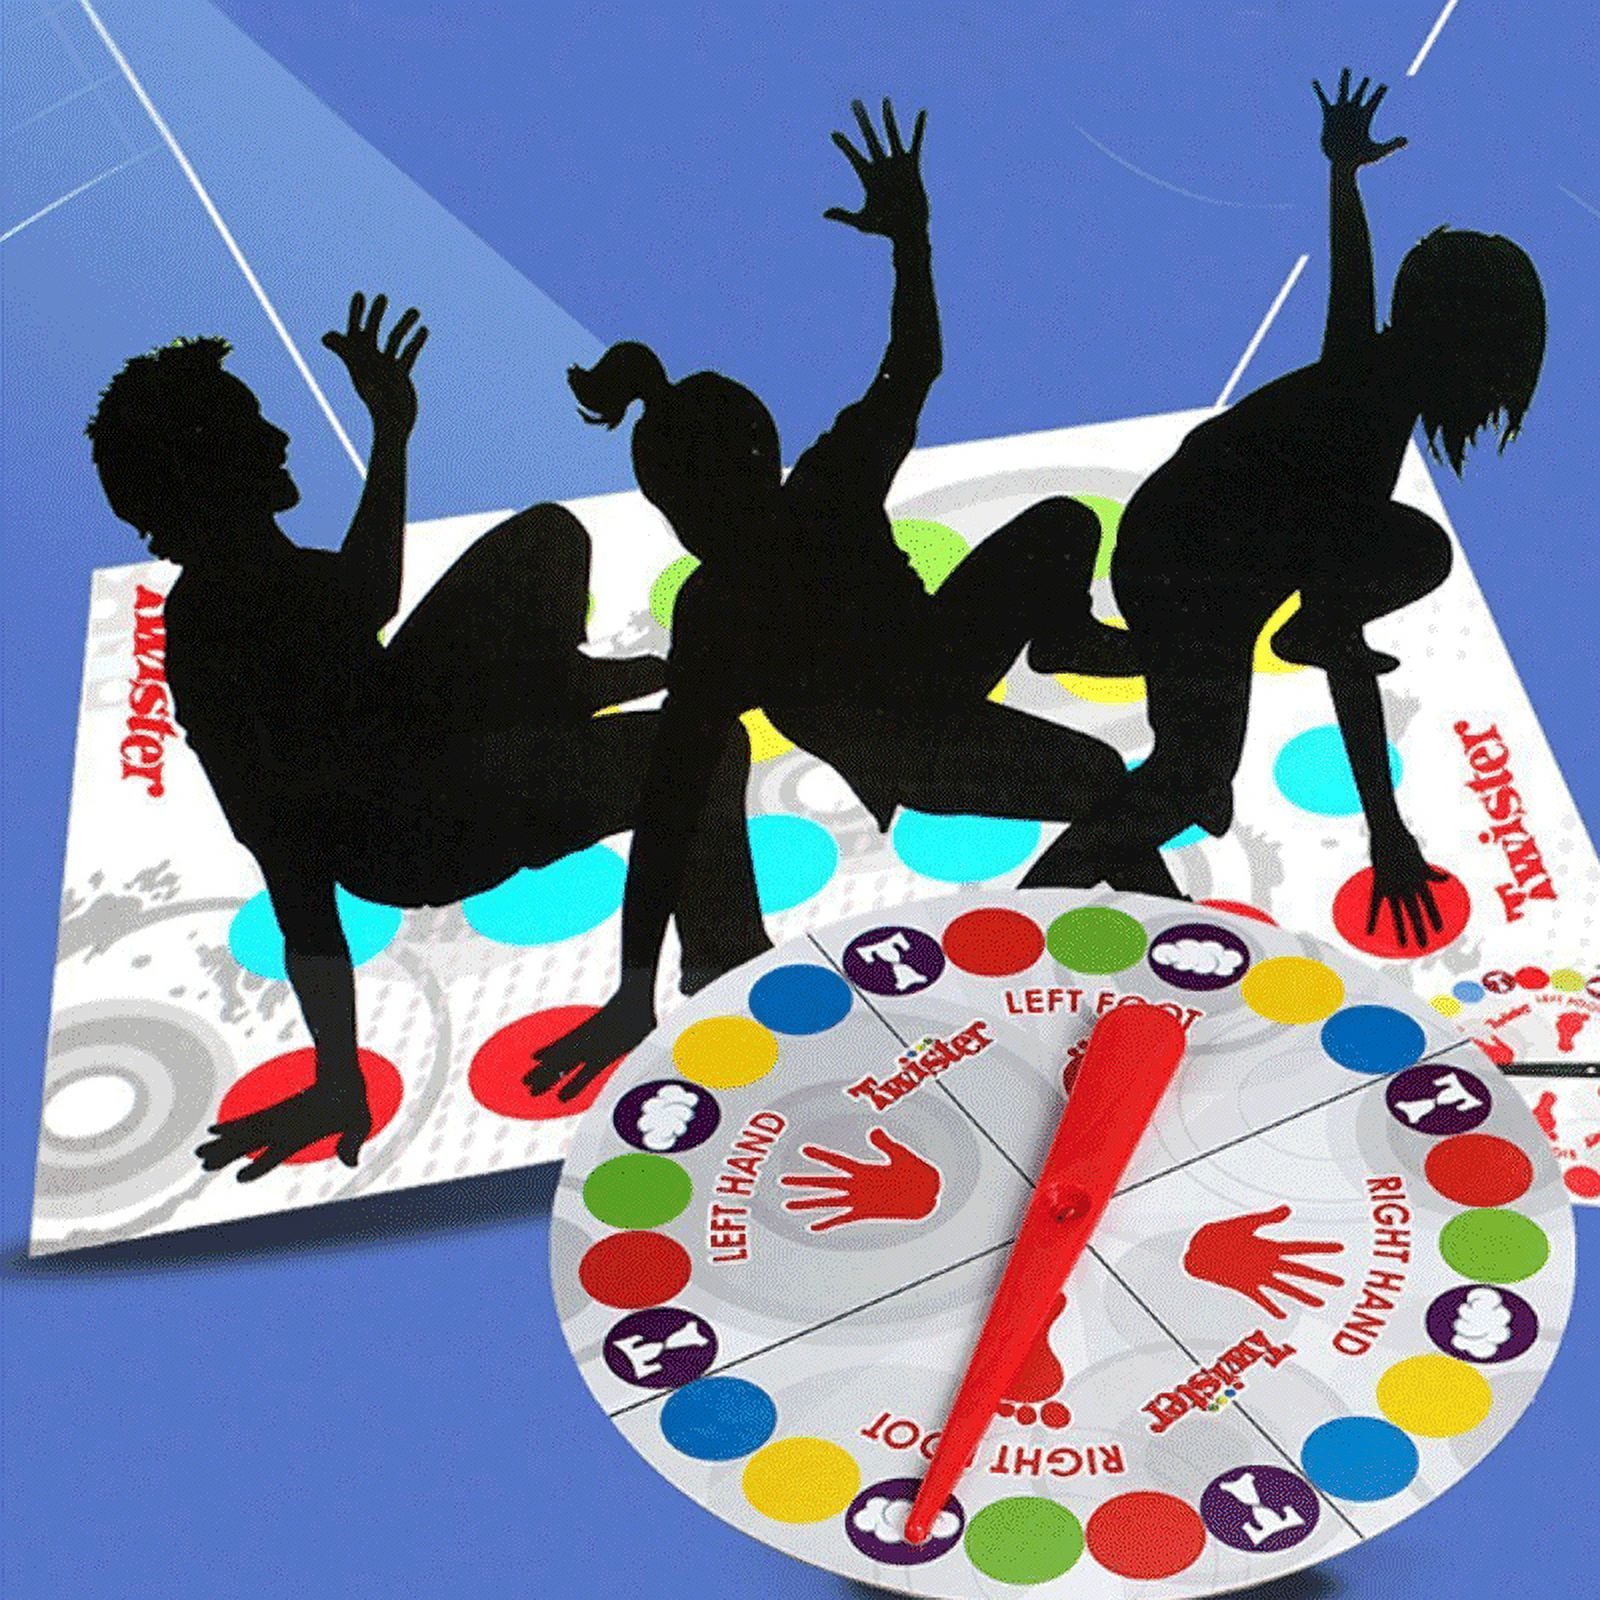 DIY Twister Game: Summer Fun for the Family - Morena's Corner